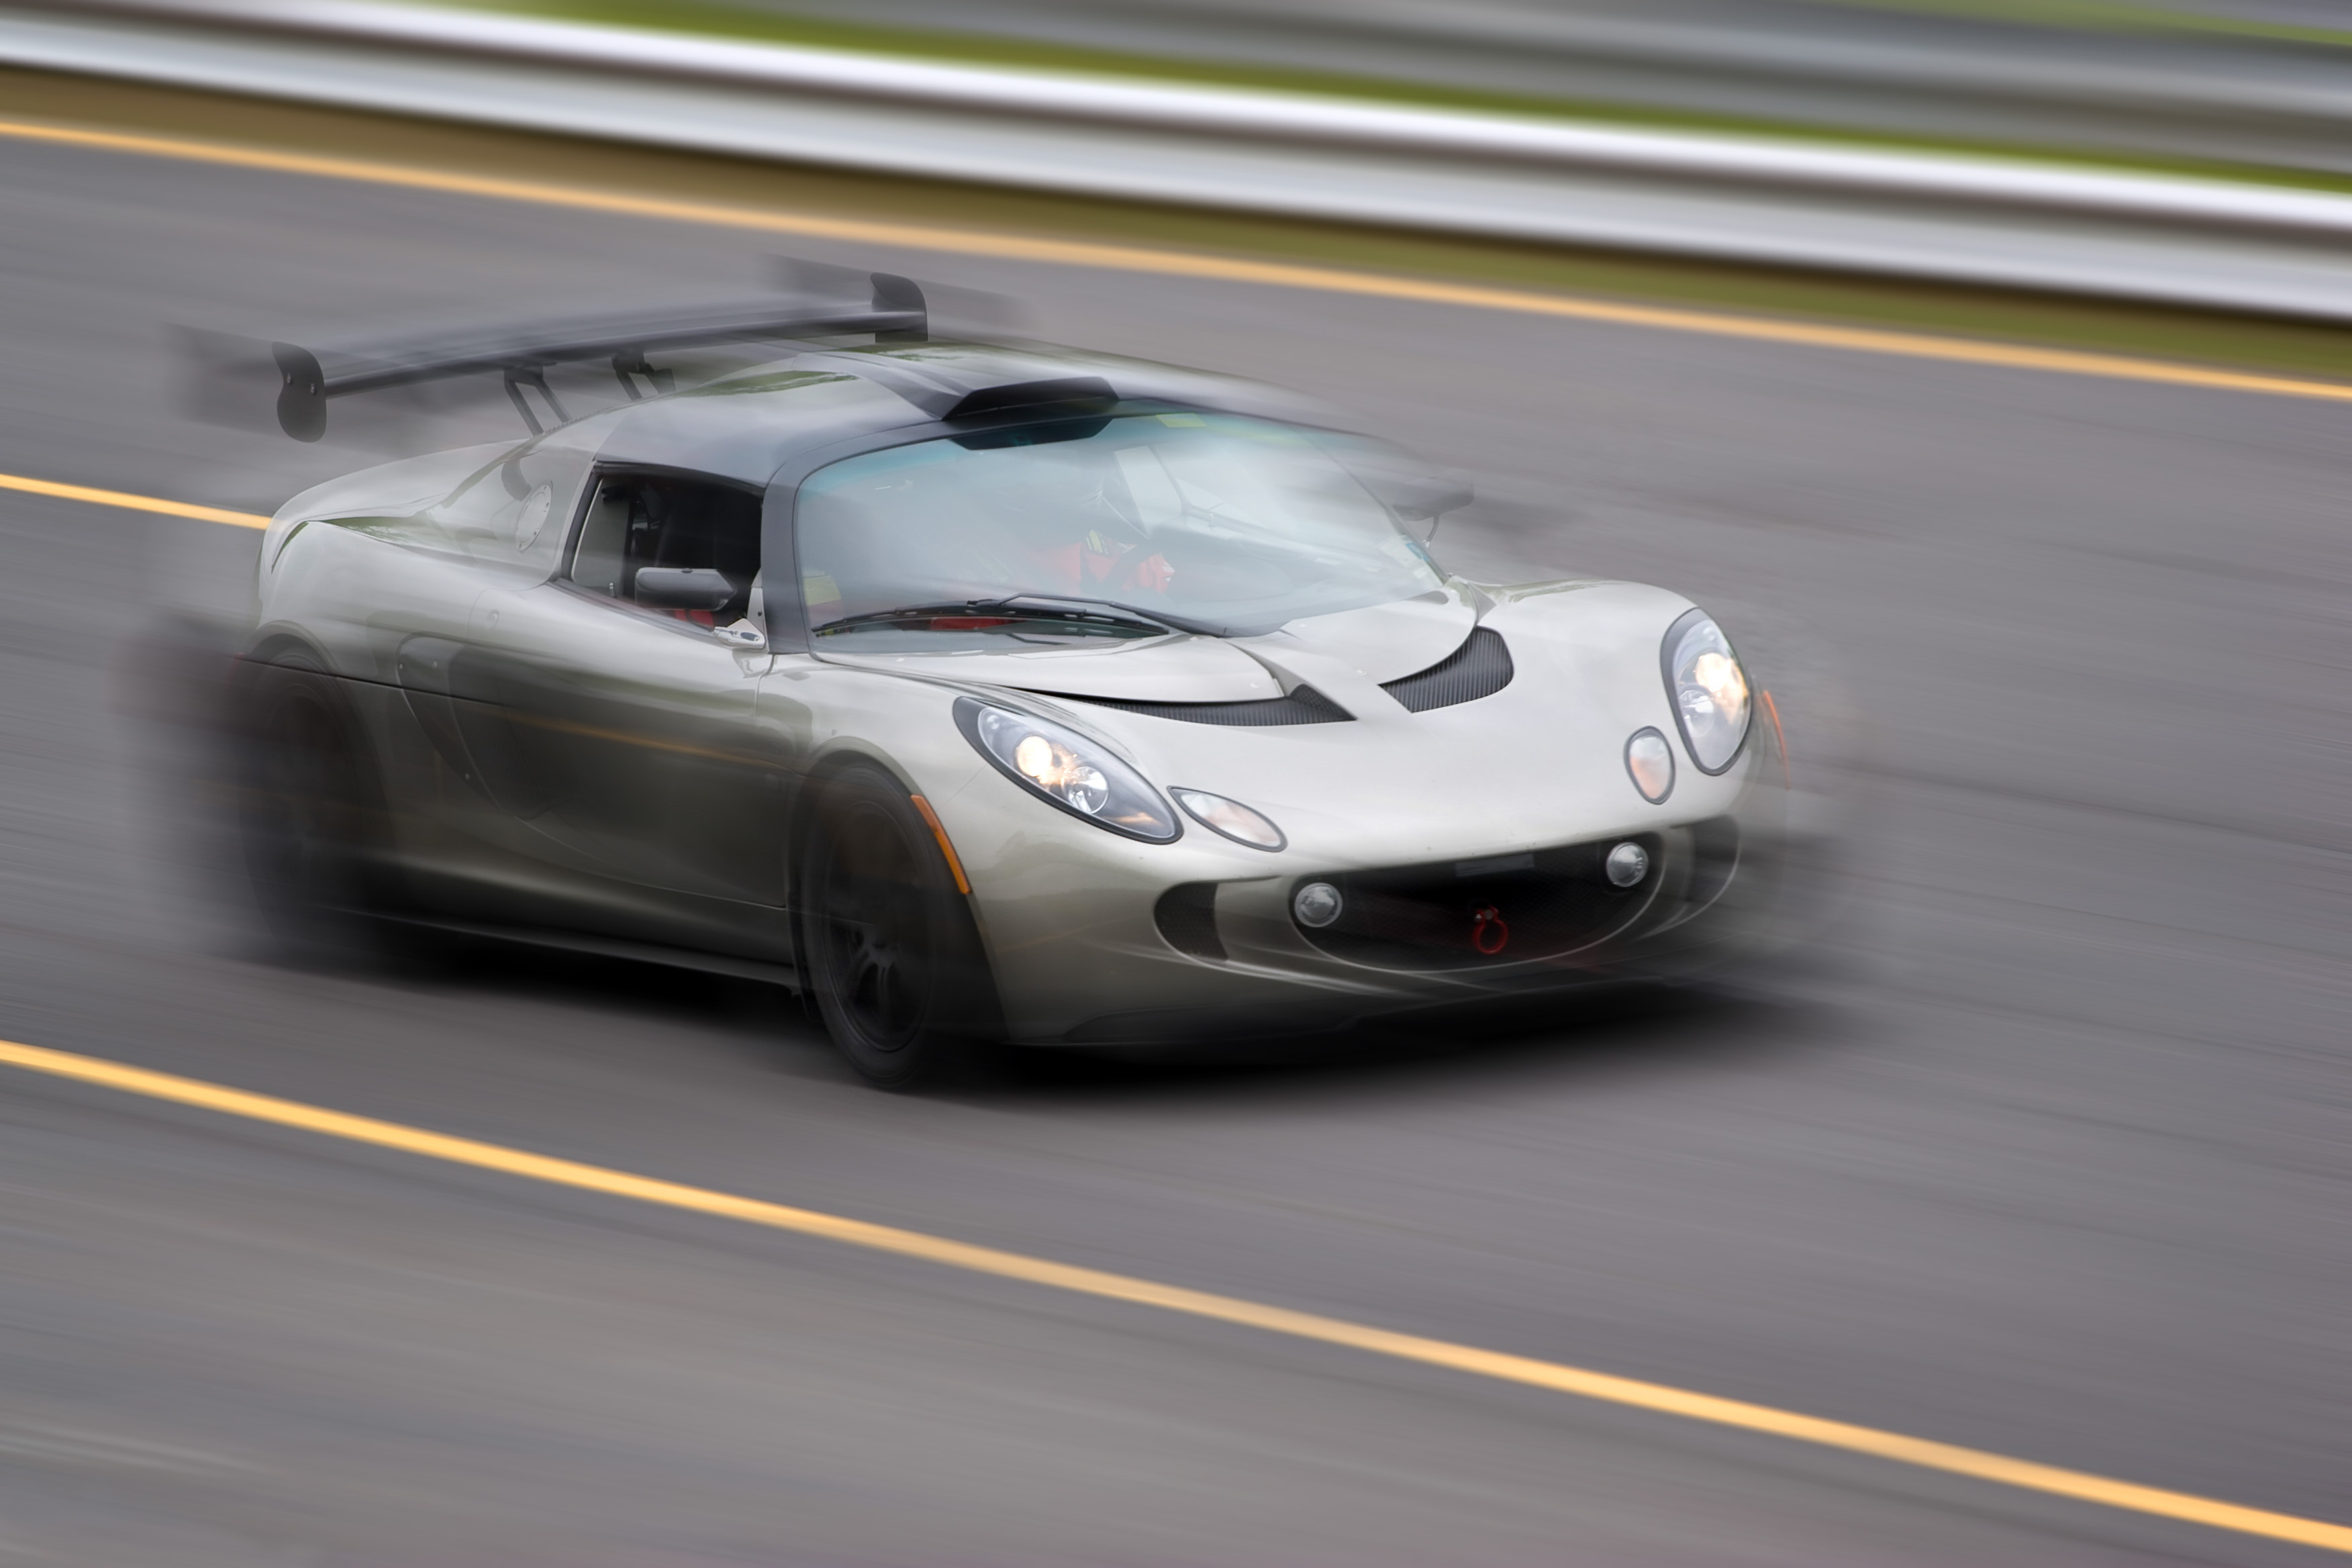 A fast silver sports car speeding down the road. Slight motion blur....